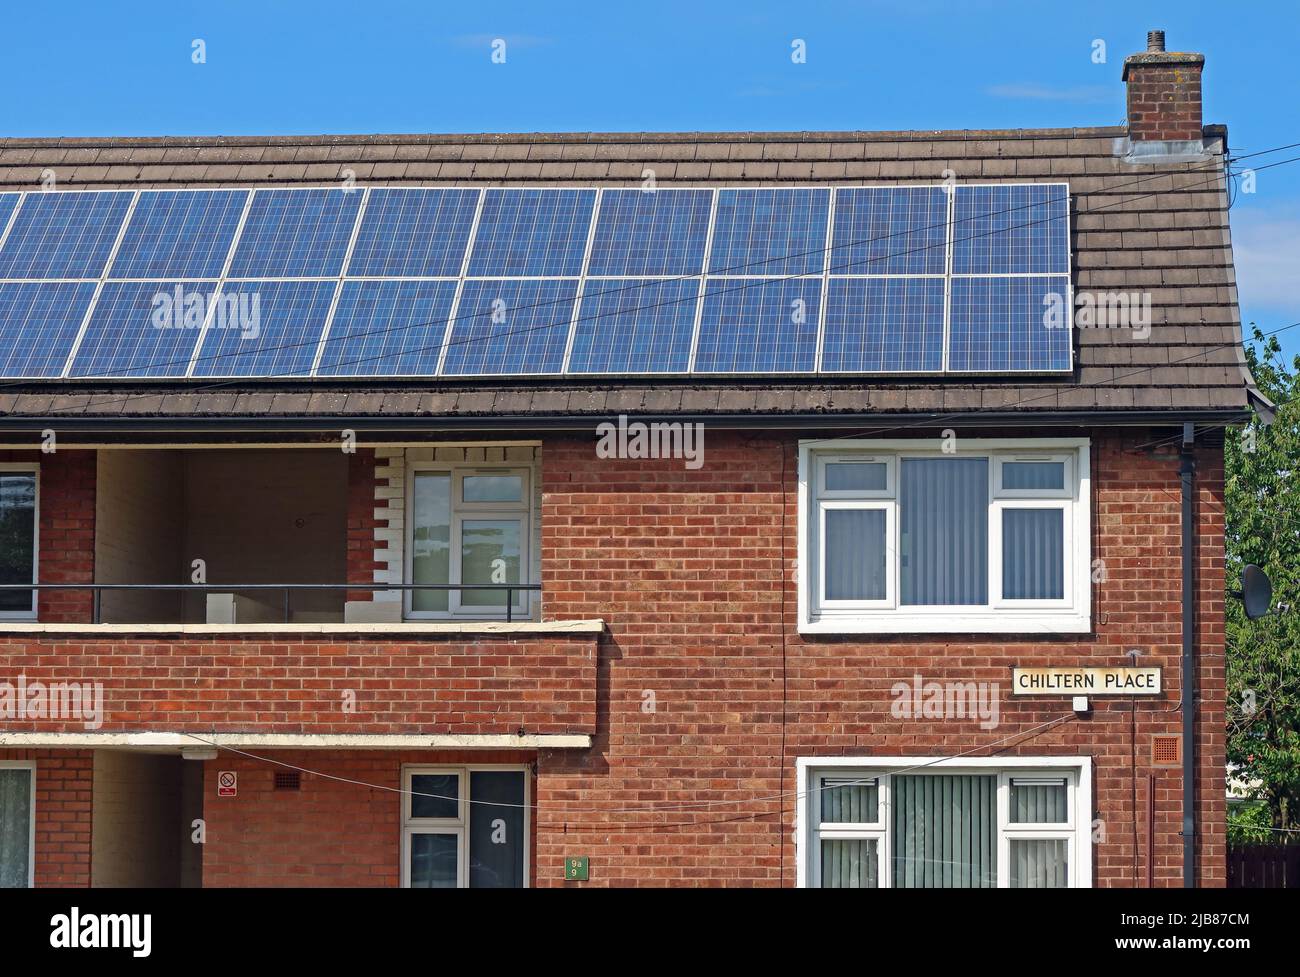 Chiltern Place Warringon Solar PV, an der Winwick Road, Cheshire, WA1, England, VEREINIGTES KÖNIGREICH Stockfoto